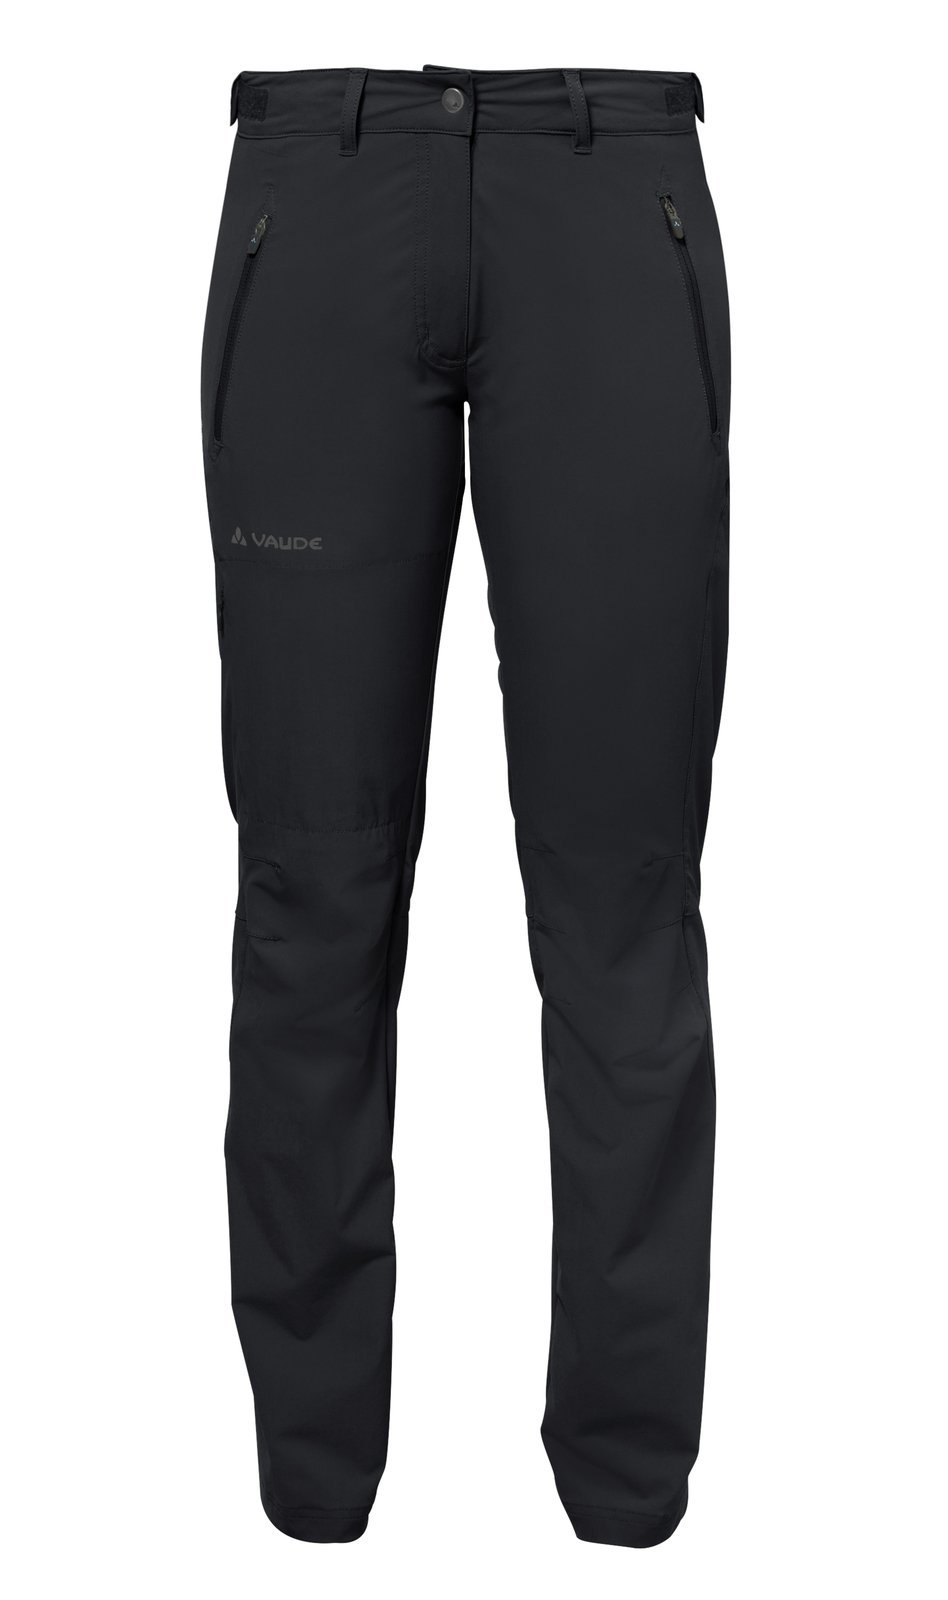 Vaude - W's Farley Stretch Pants II - bluesign® certified materials - Weekendbee - sustainable sportswear